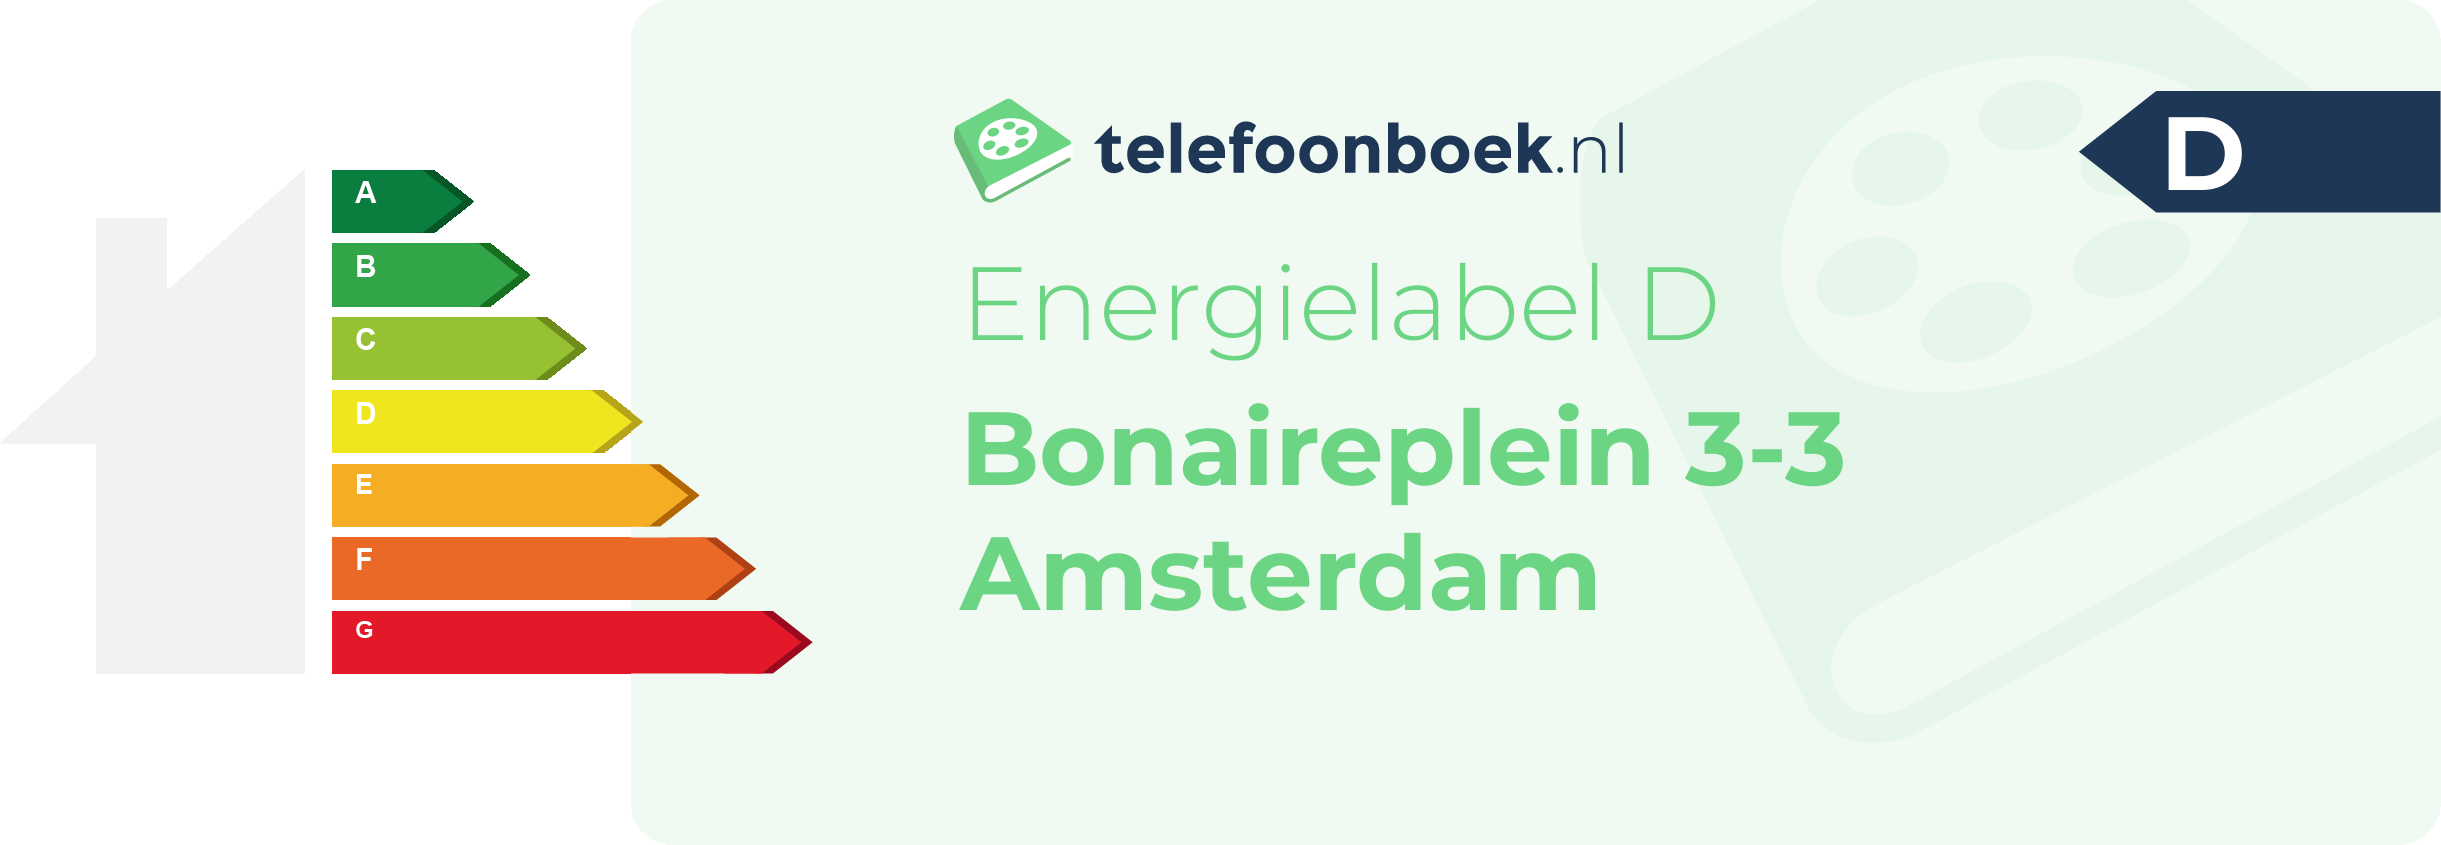 Energielabel Bonaireplein 3-3 Amsterdam